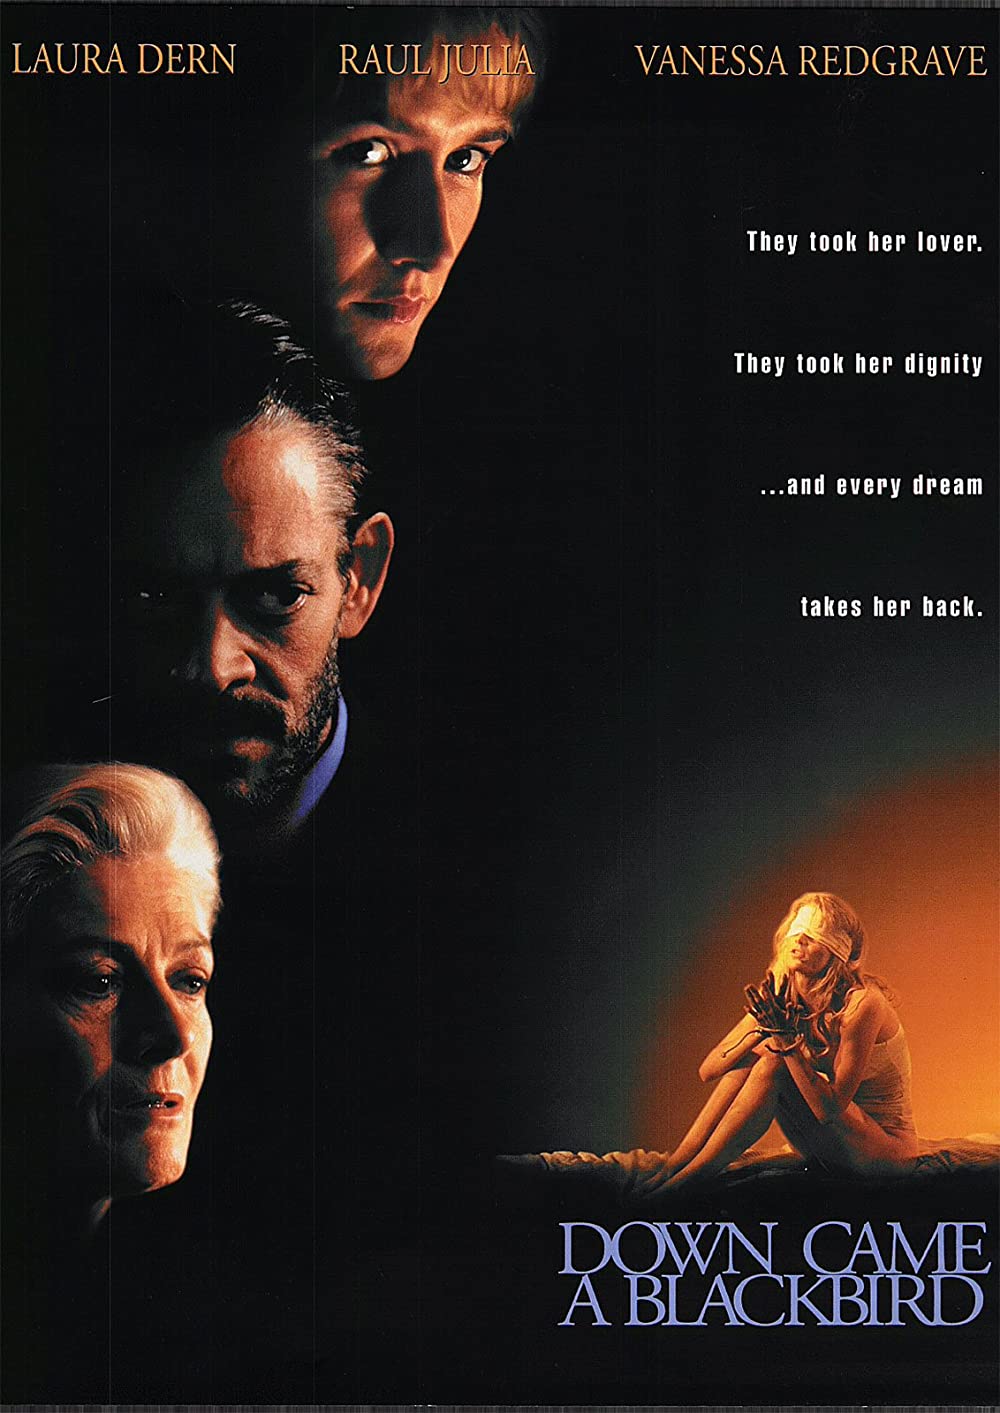 Filmbeschreibung zu Blackbird (1995)